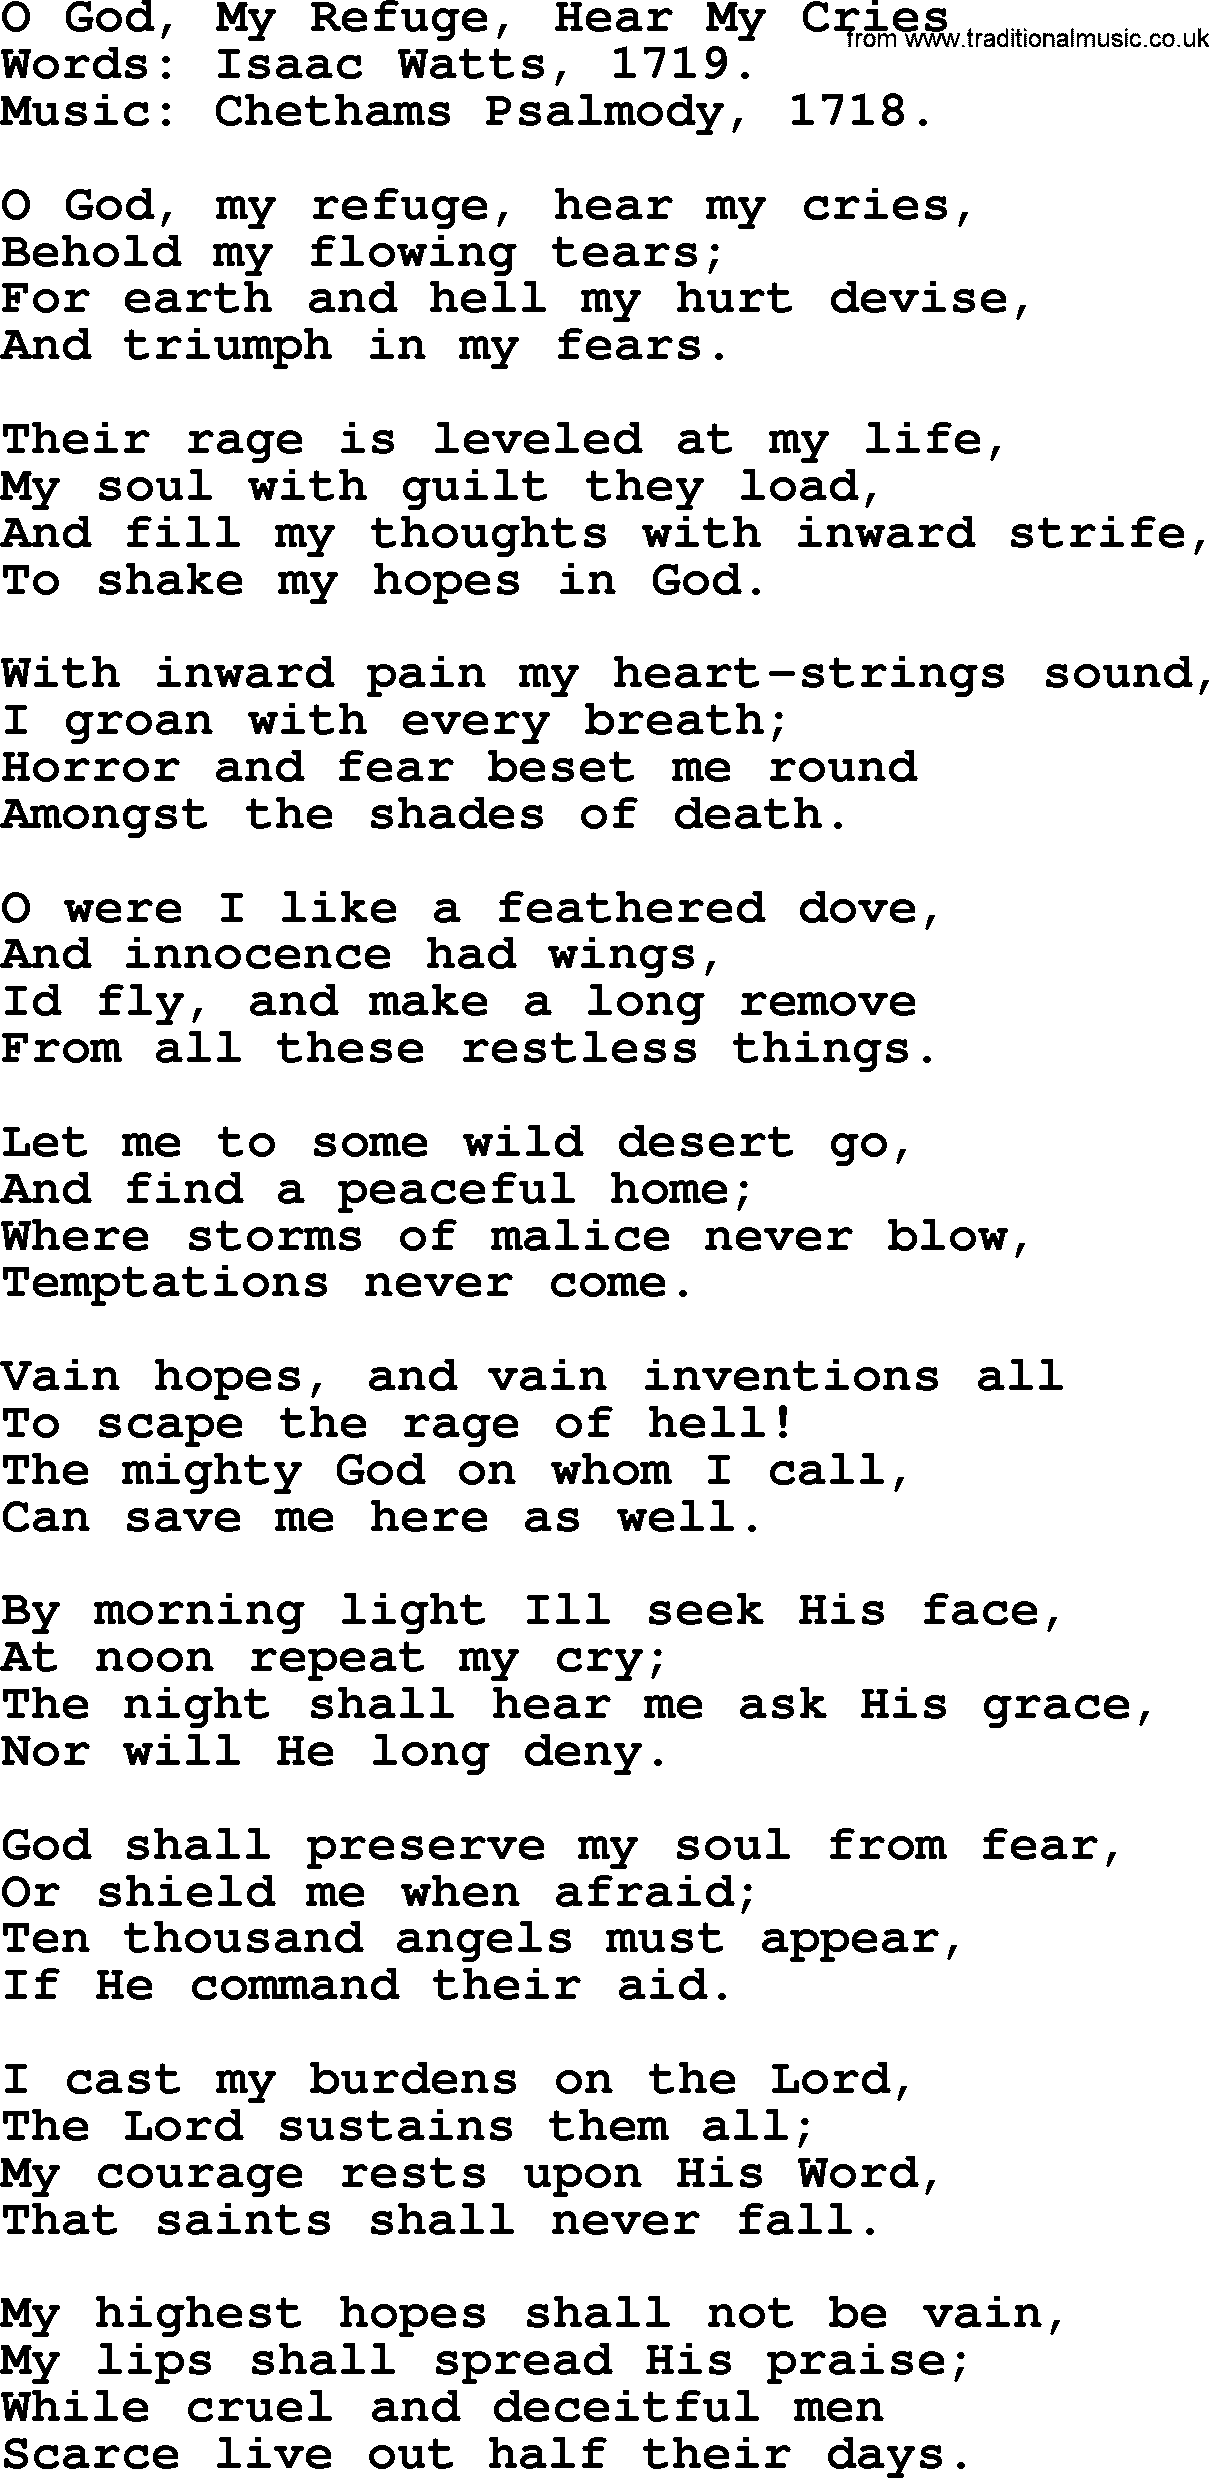 Isaac Watts Christian hymn: O God, My Refuge, Hear My Cries- lyricss